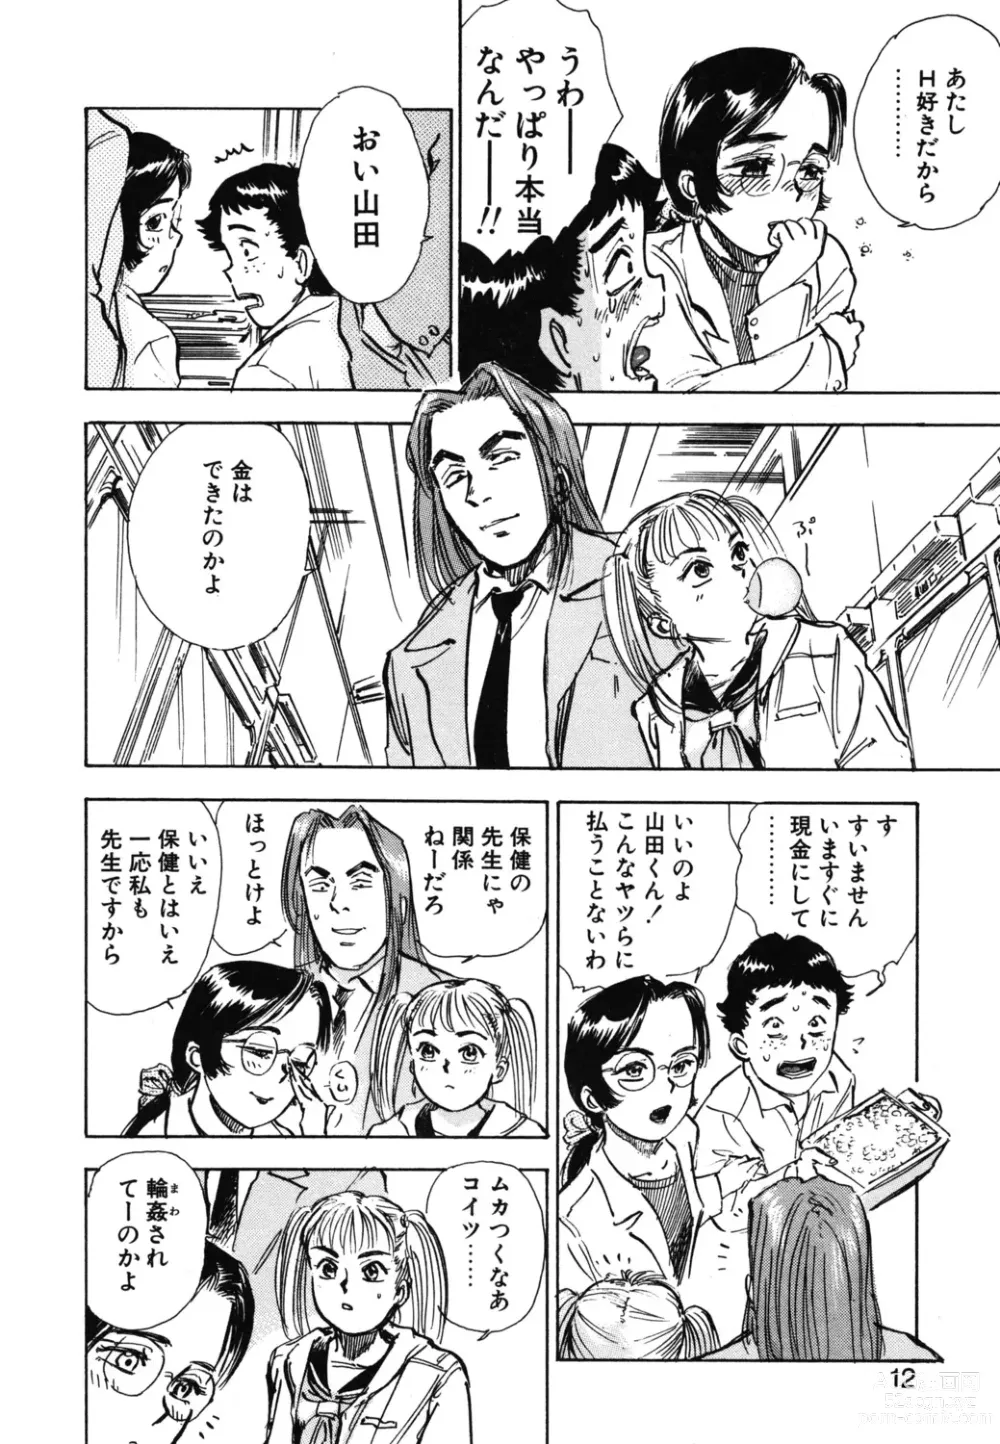 Page 10 of manga Abunai Reiko Sensei 1